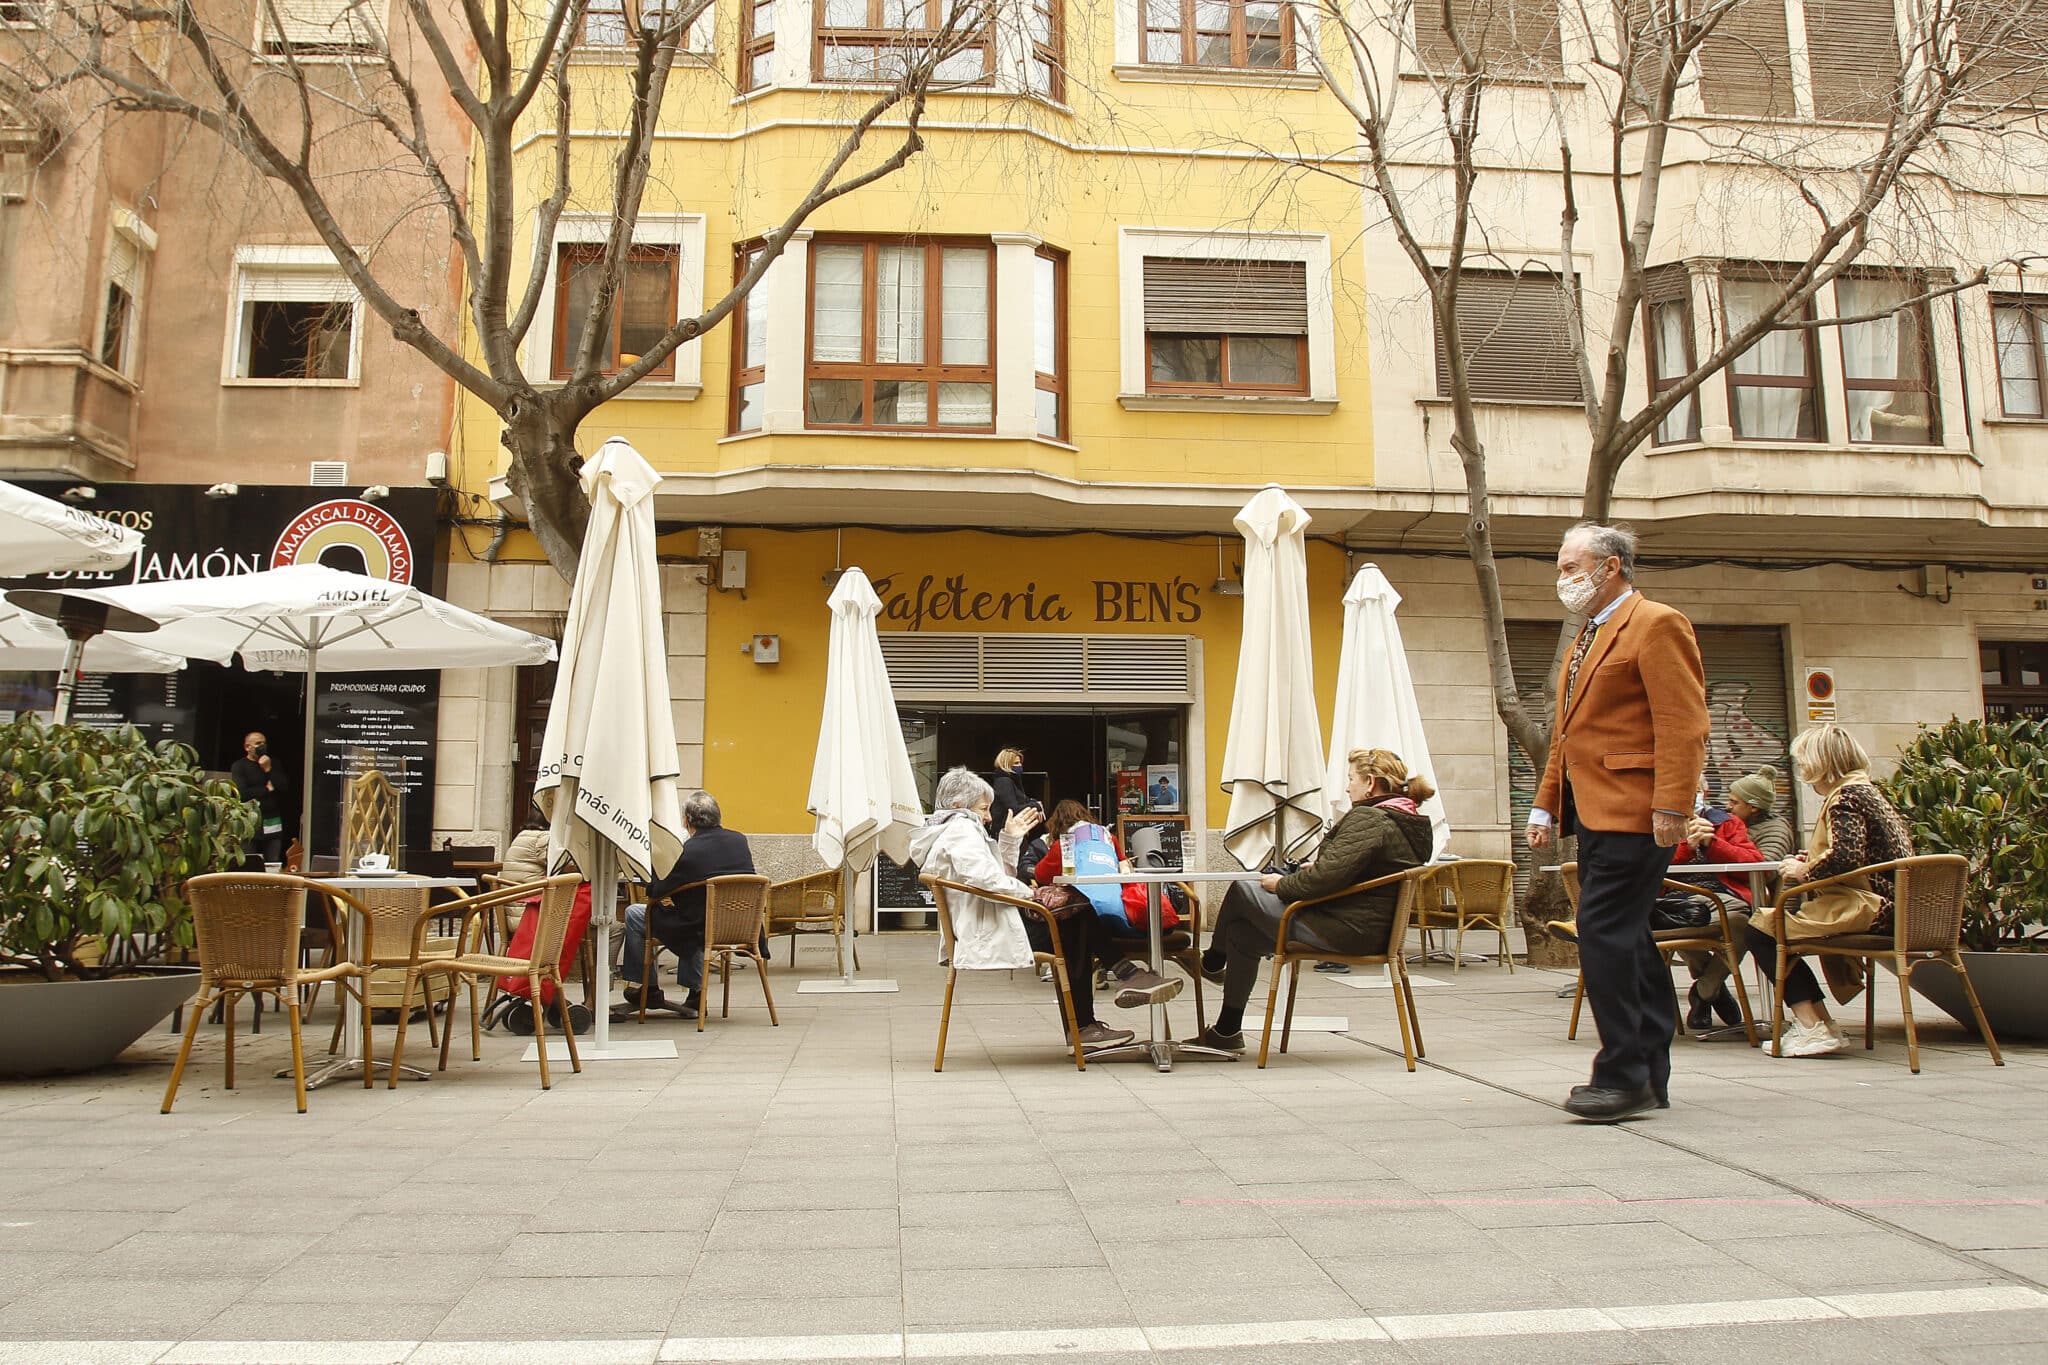 Varias personas en la terraza de un bar en Palma, Mallorca.